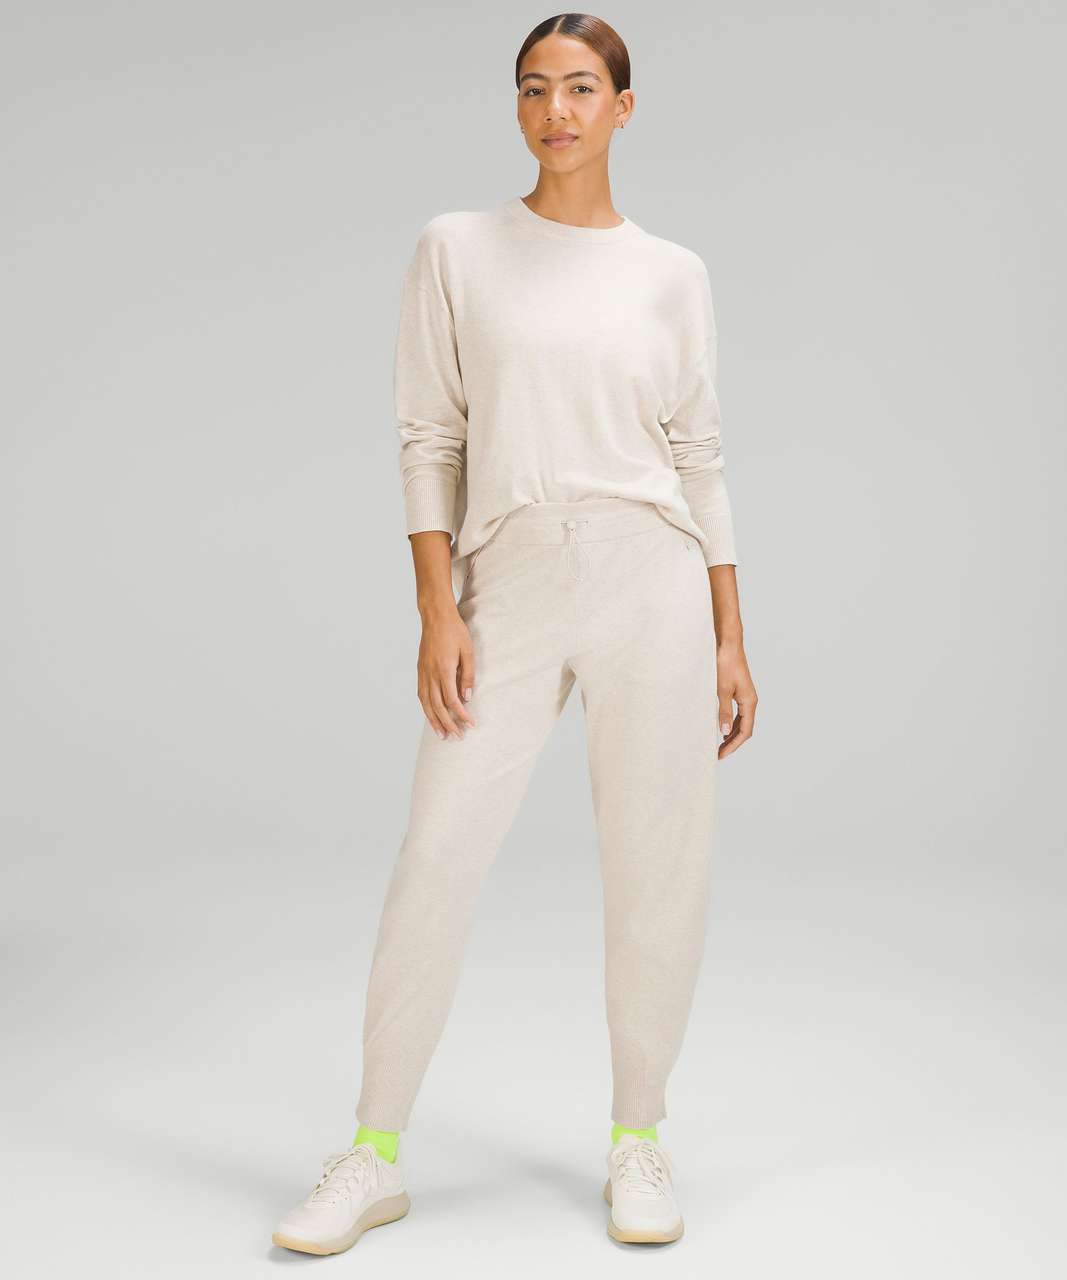 Lululemon Cotton-Cashmere Knit Mid-Rise Jogger - Heathered Natural Ivory